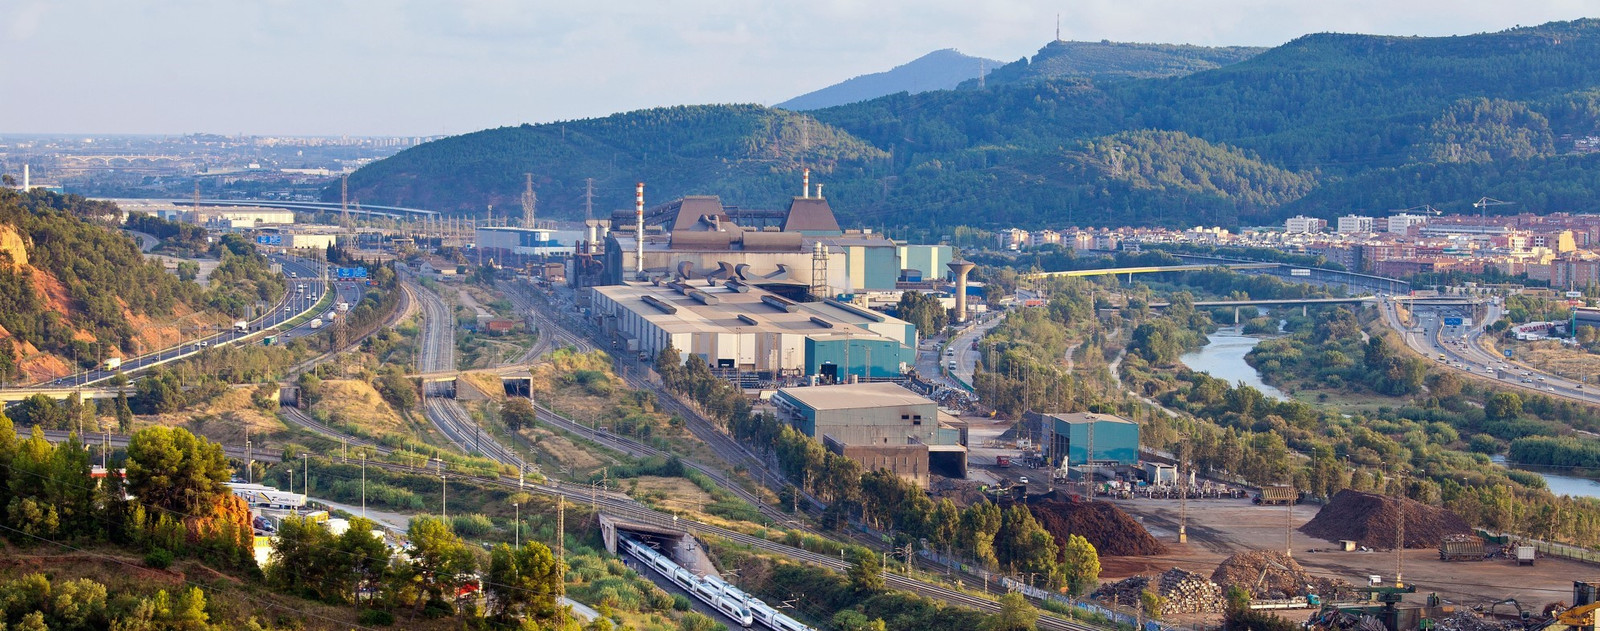 Zona industrial, urbana y espacios naturales en el Baix Llobregat